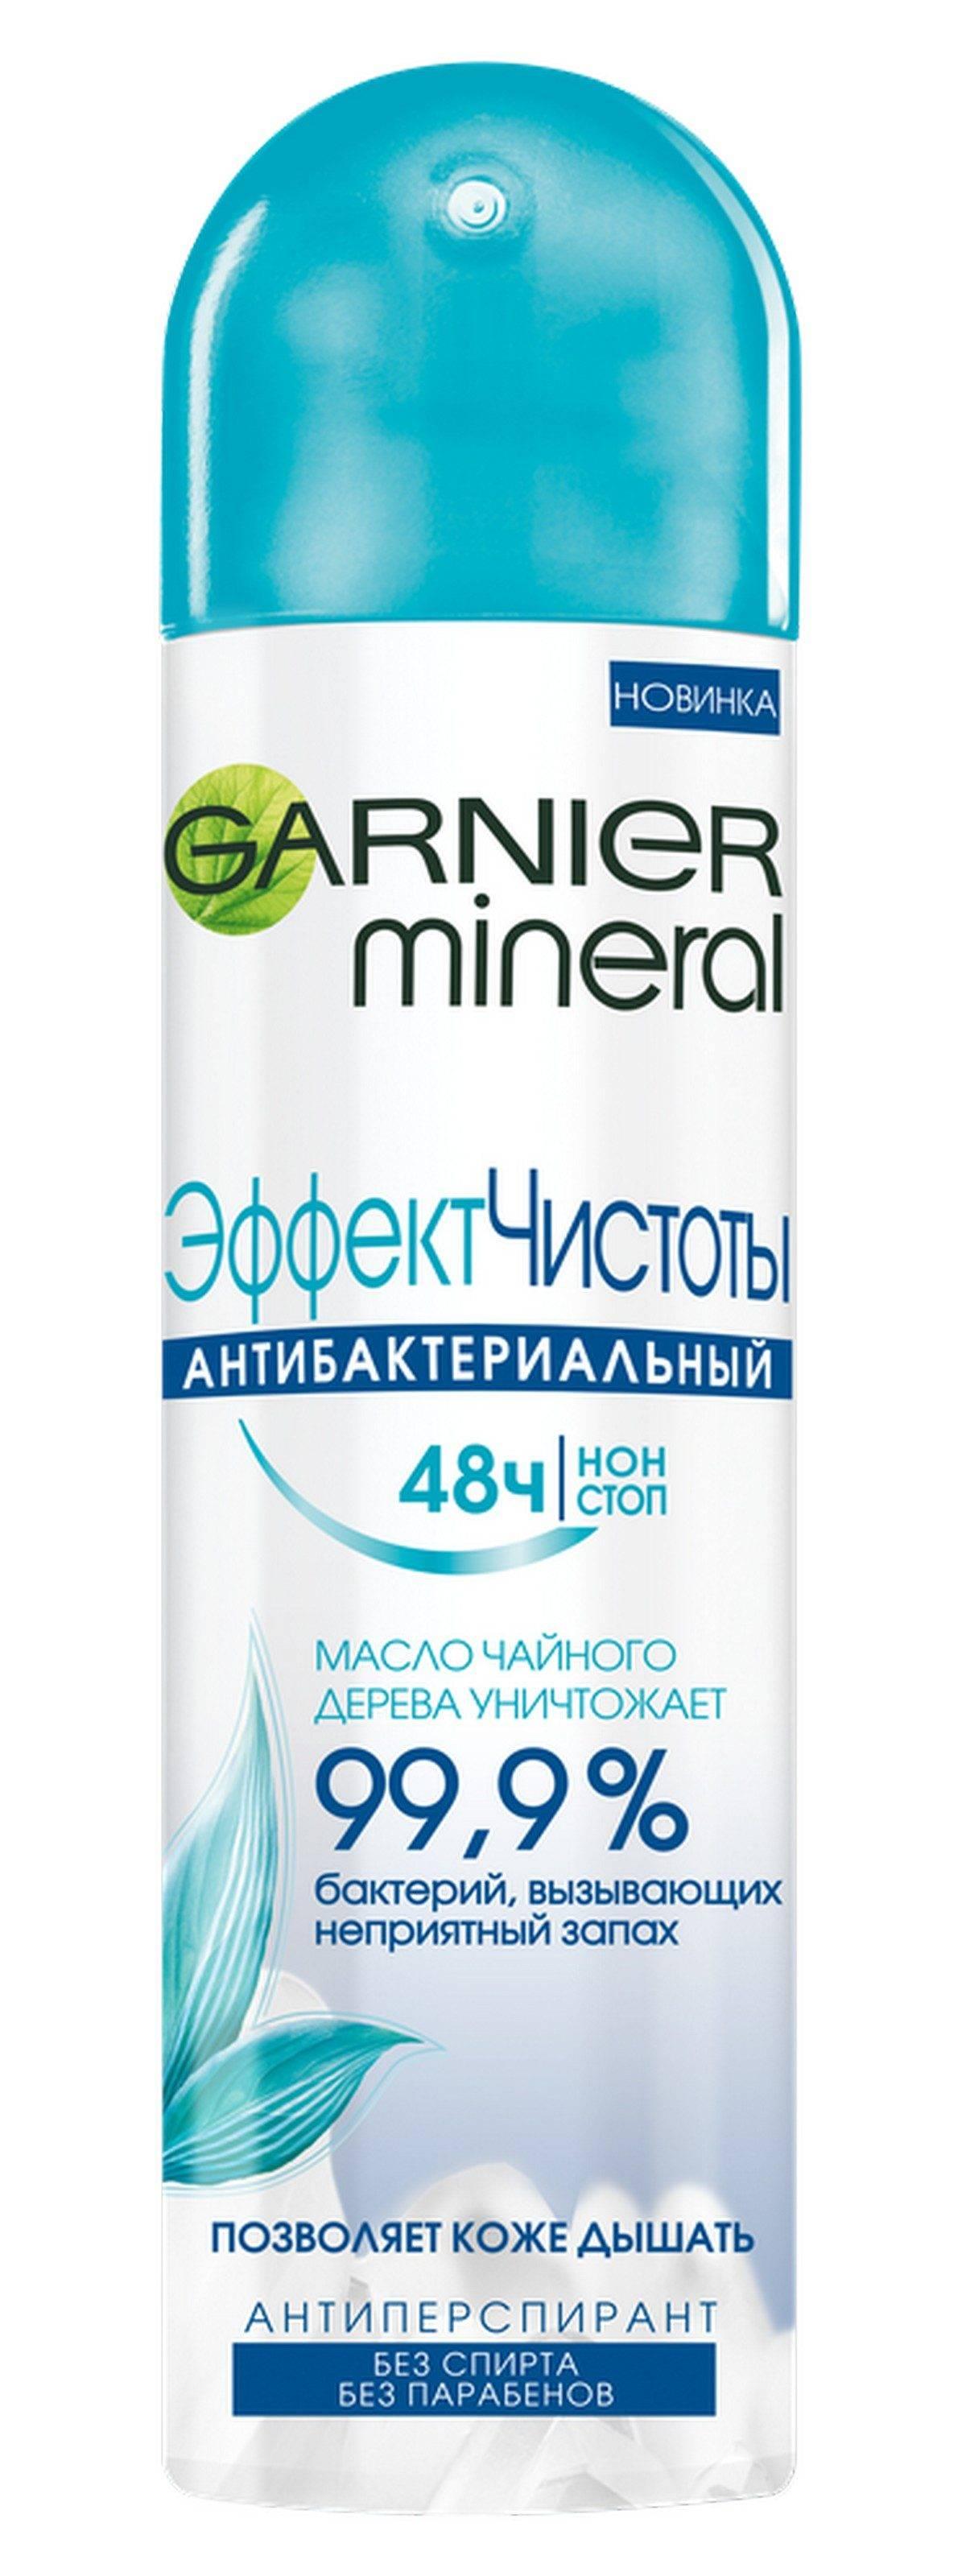 Дезодорант Garnier Mineral Эффект чистоты спрей 150 мл., баллон